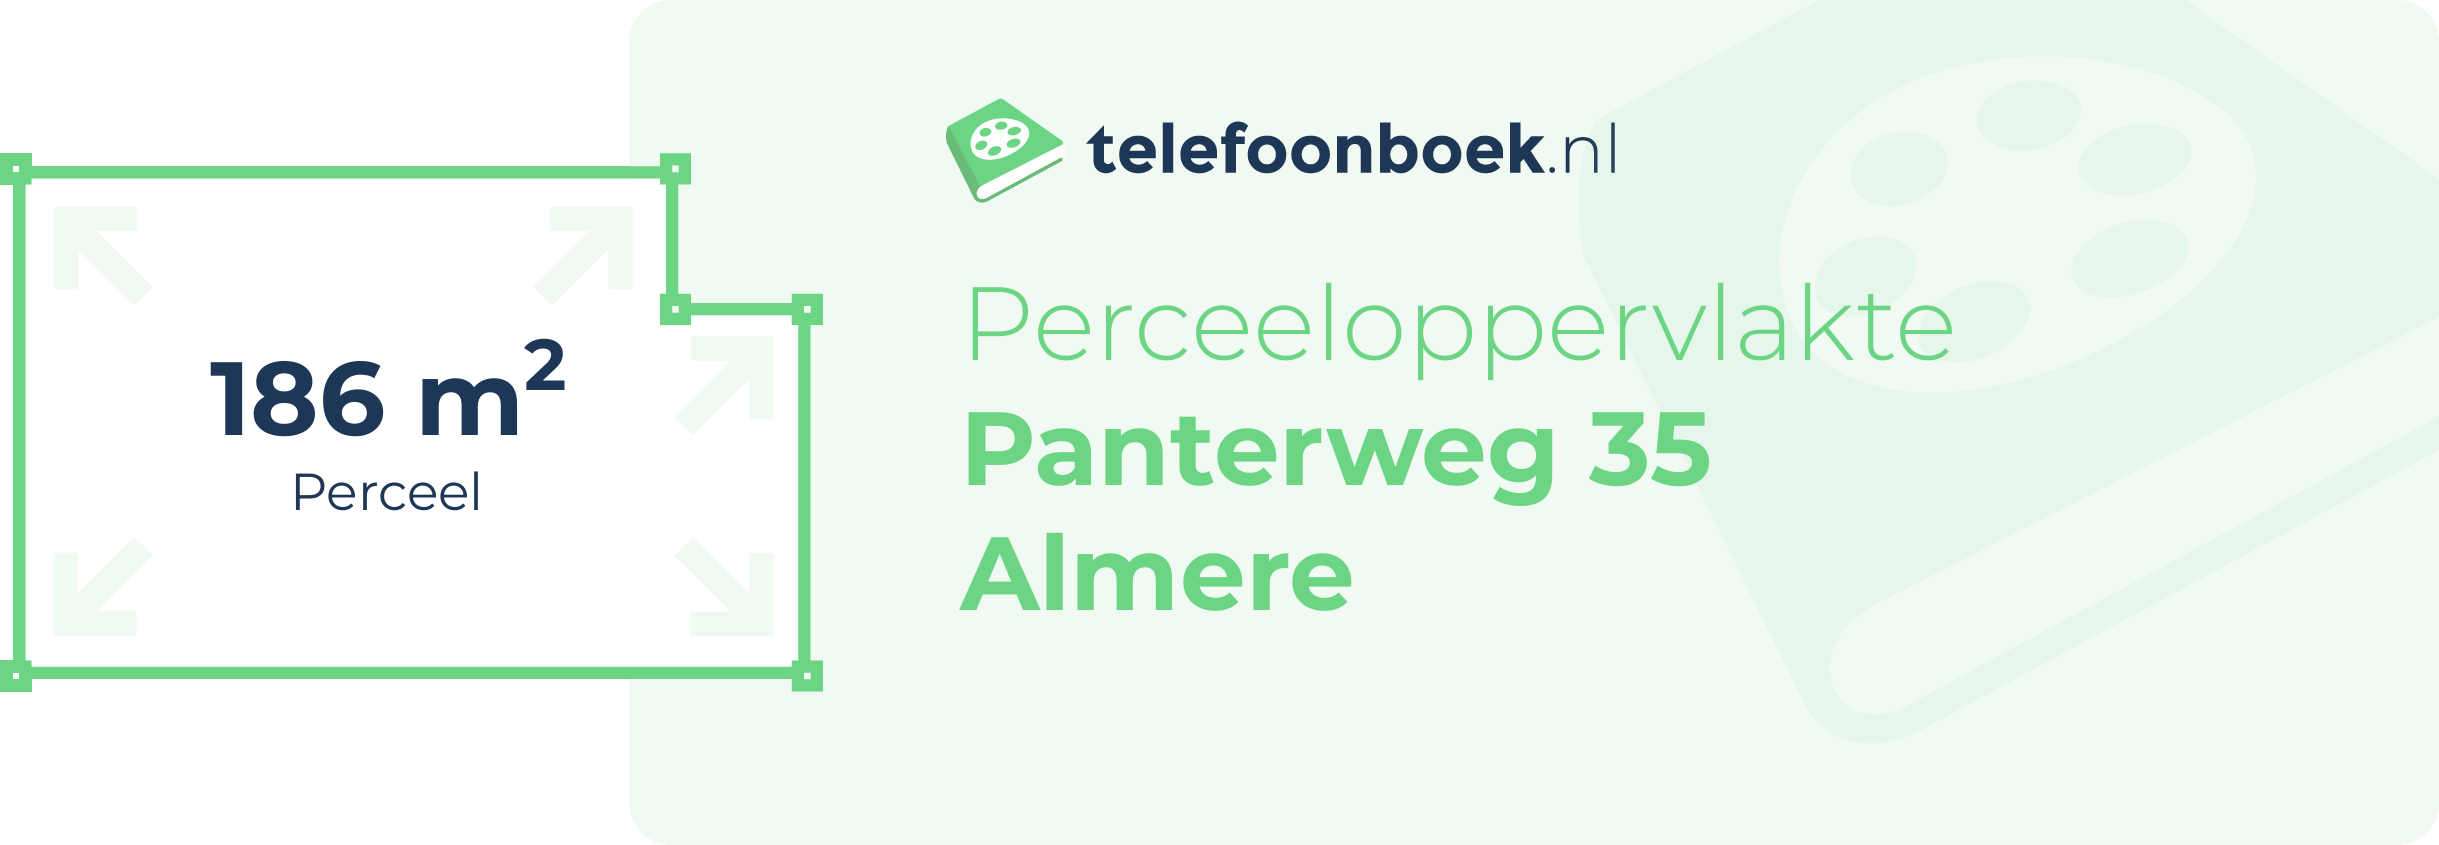 Perceeloppervlakte Panterweg 35 Almere